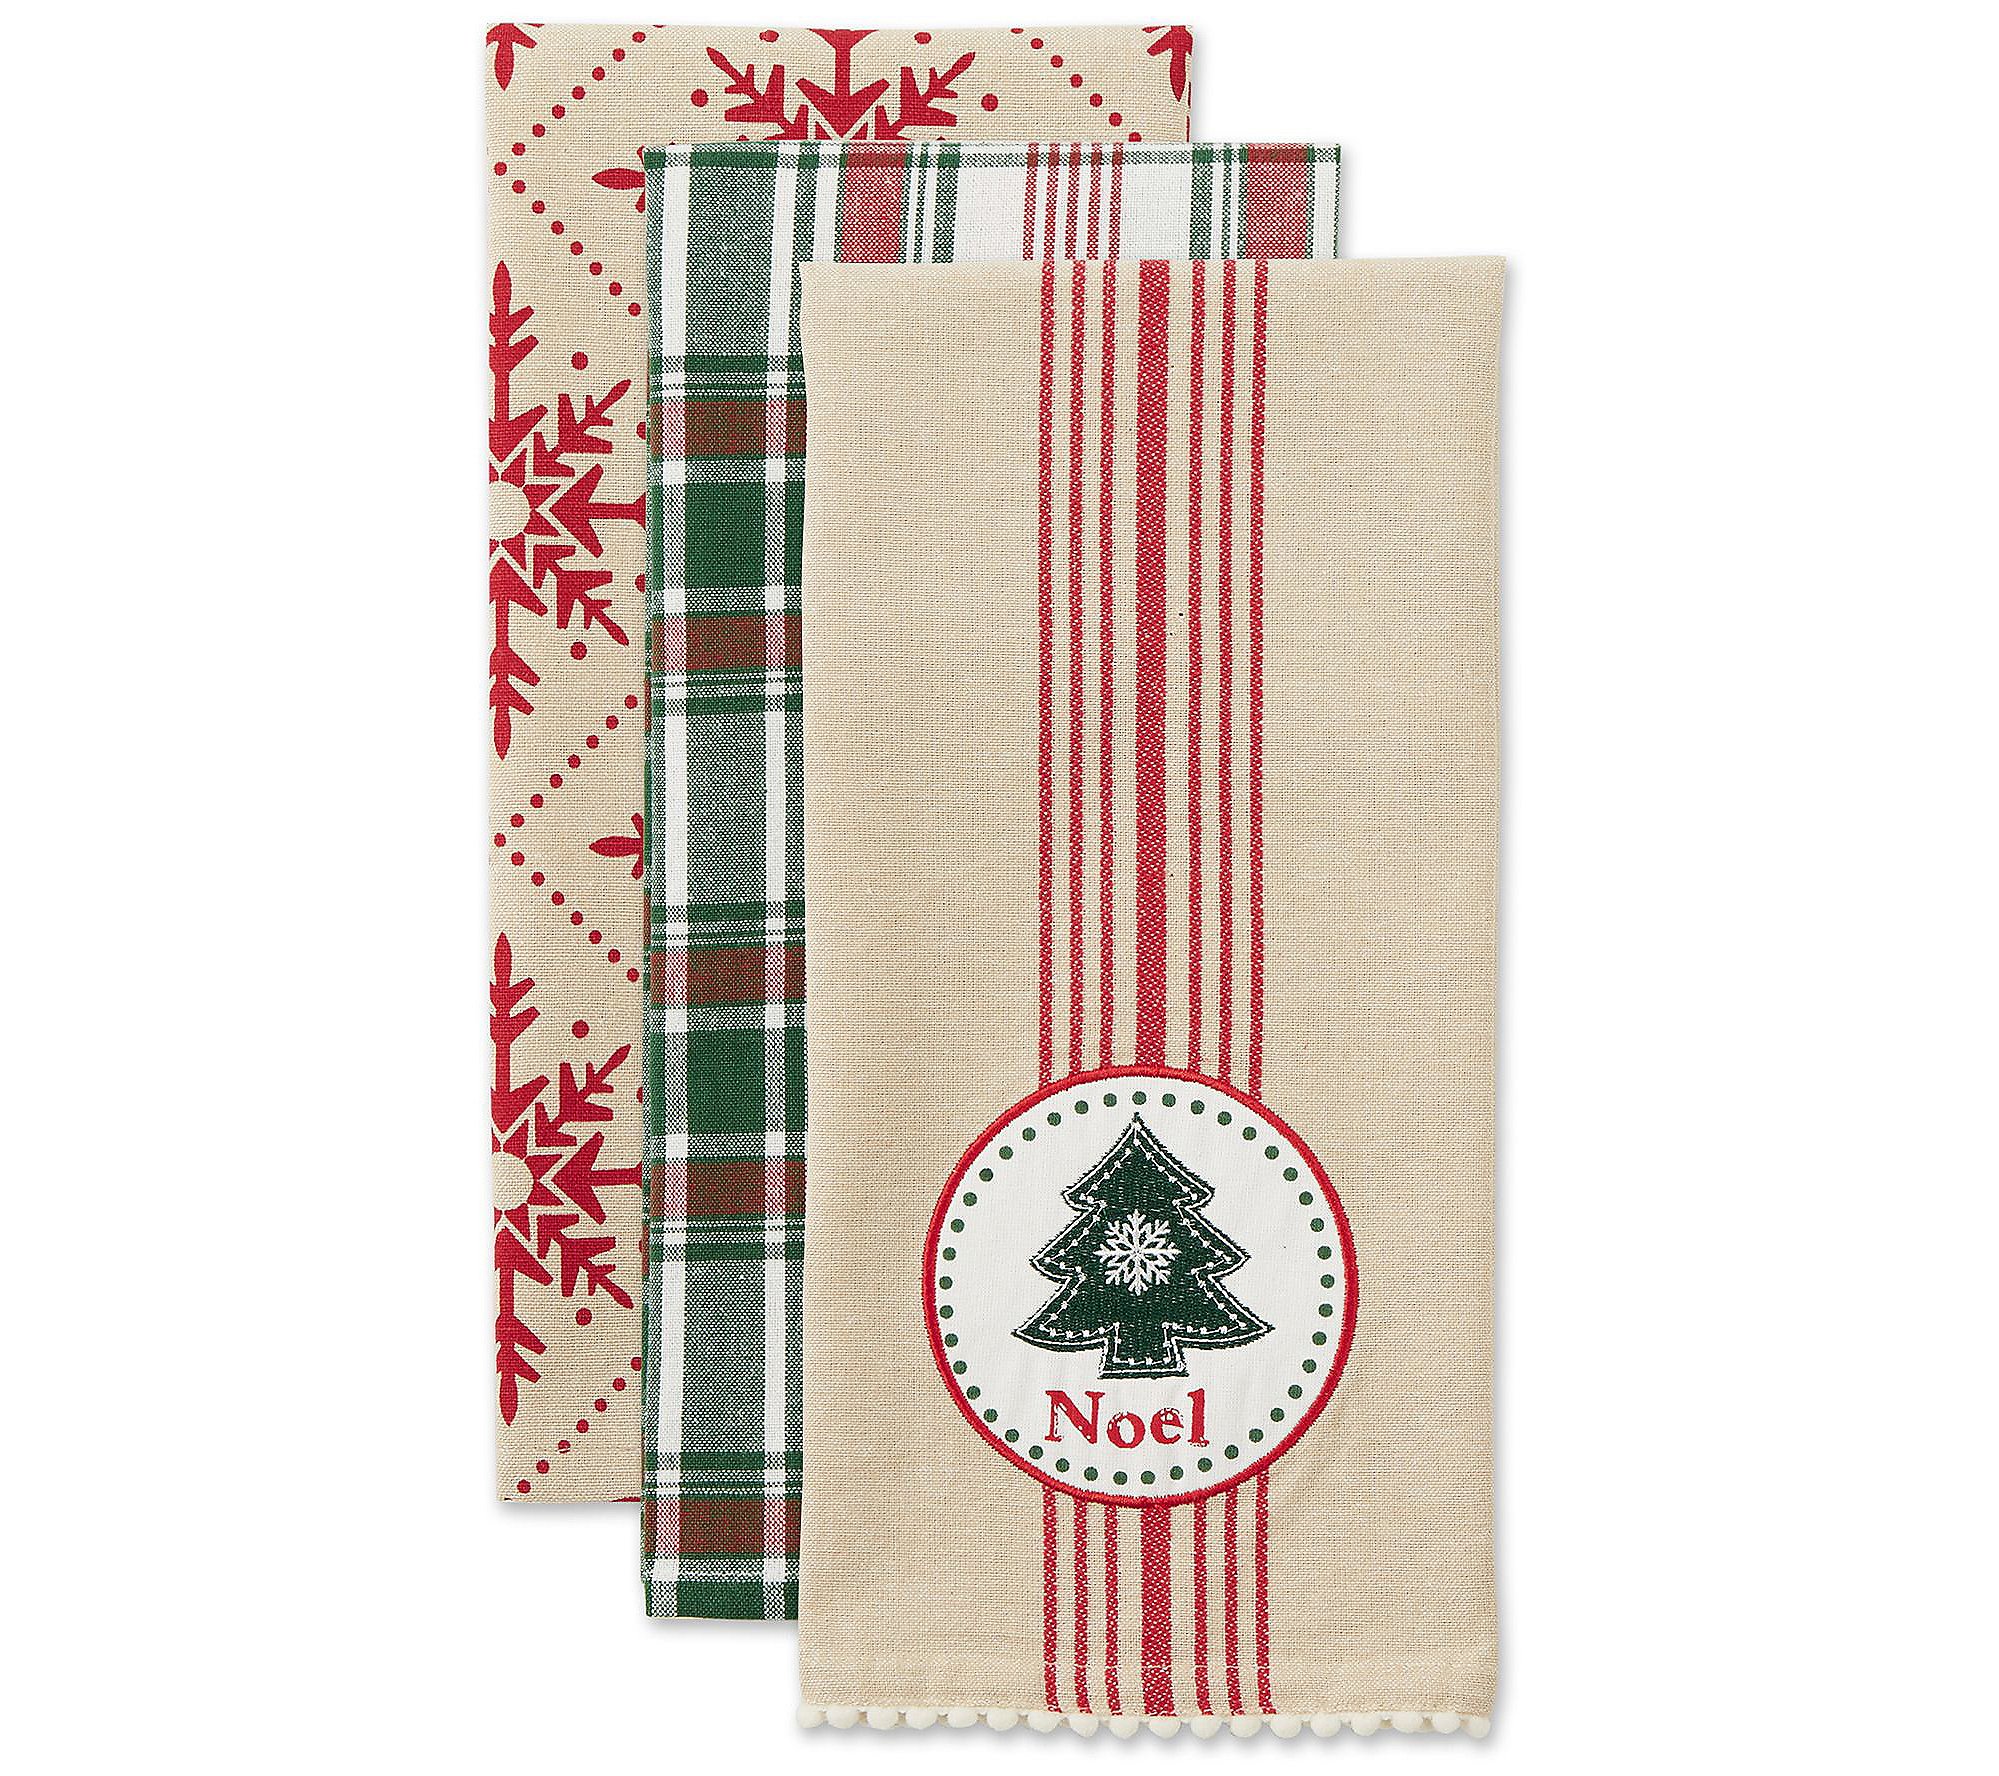 Design Imports Set of 3 Assorted Noel Tree Kitc hen Towels